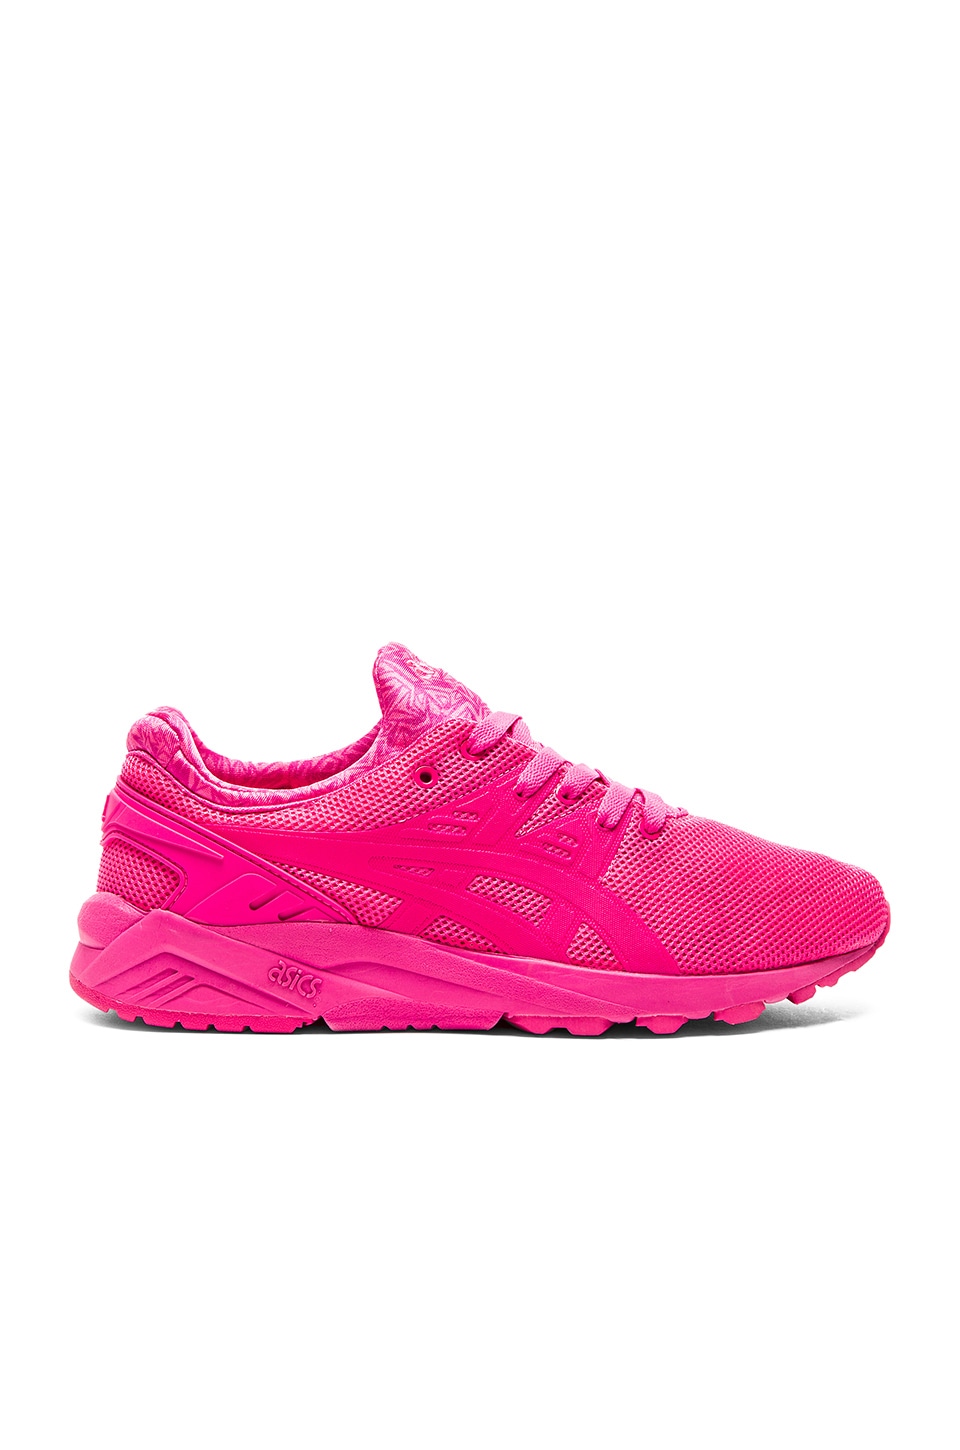 asics pink sneakers